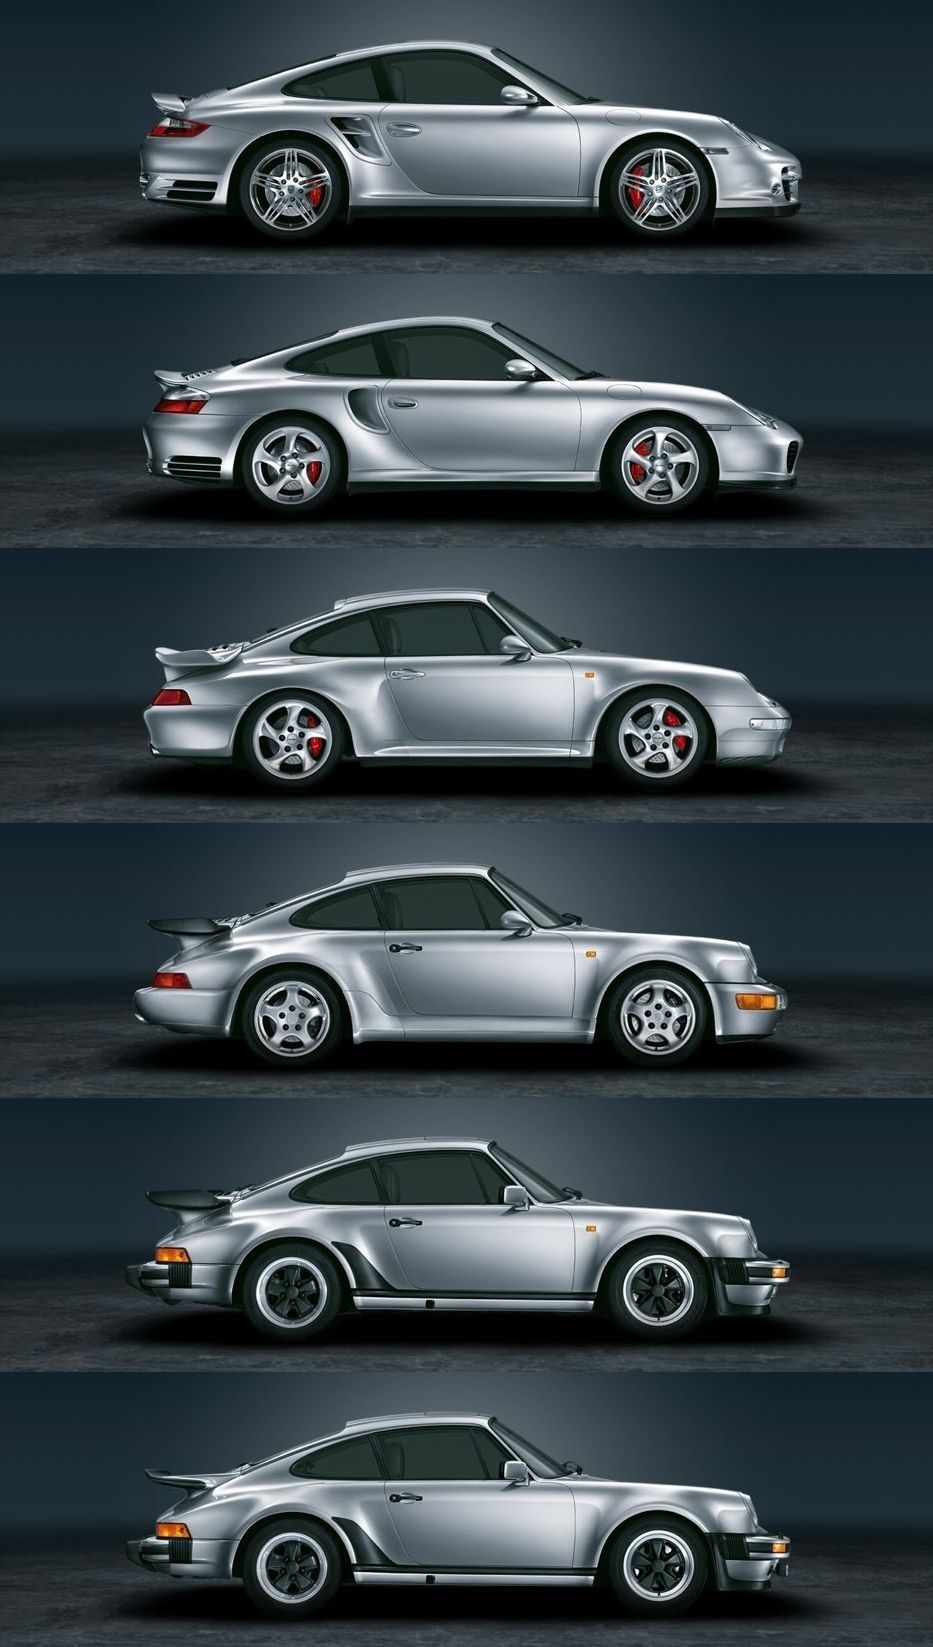 The EVOLUTION of the Porsche 911 turbo….